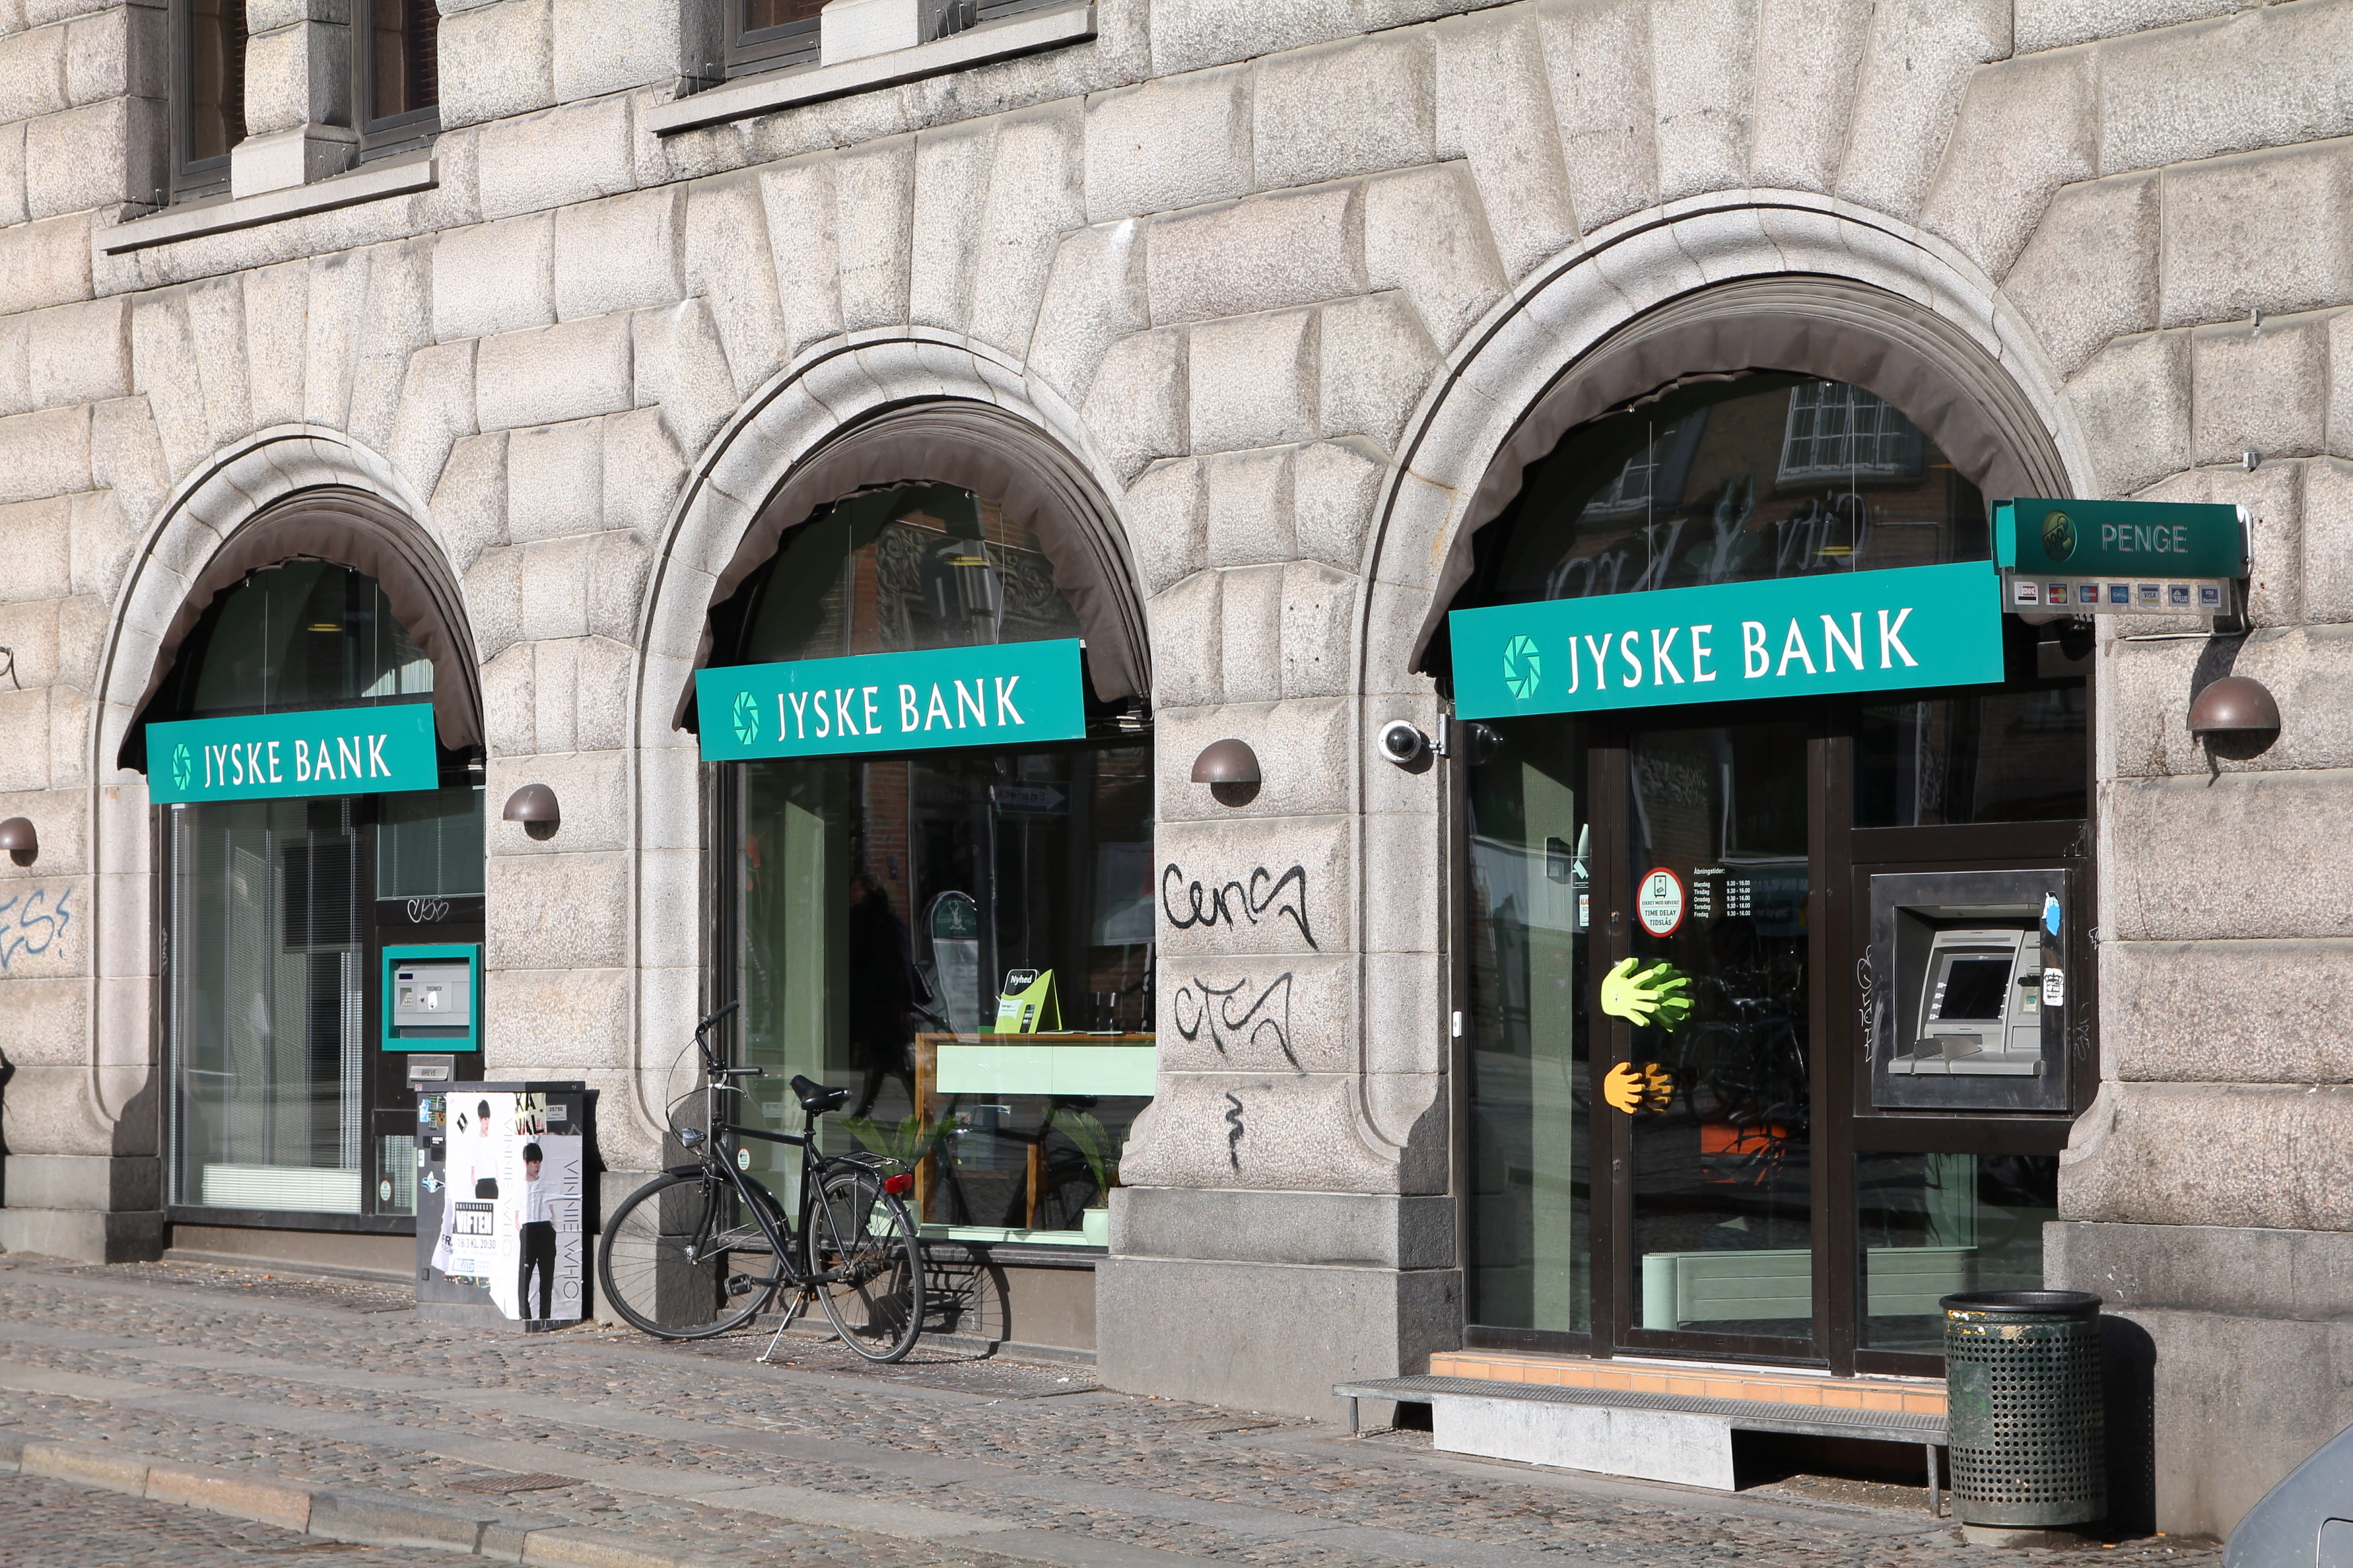 Jyske Bank stimulating the economy with cheap lending